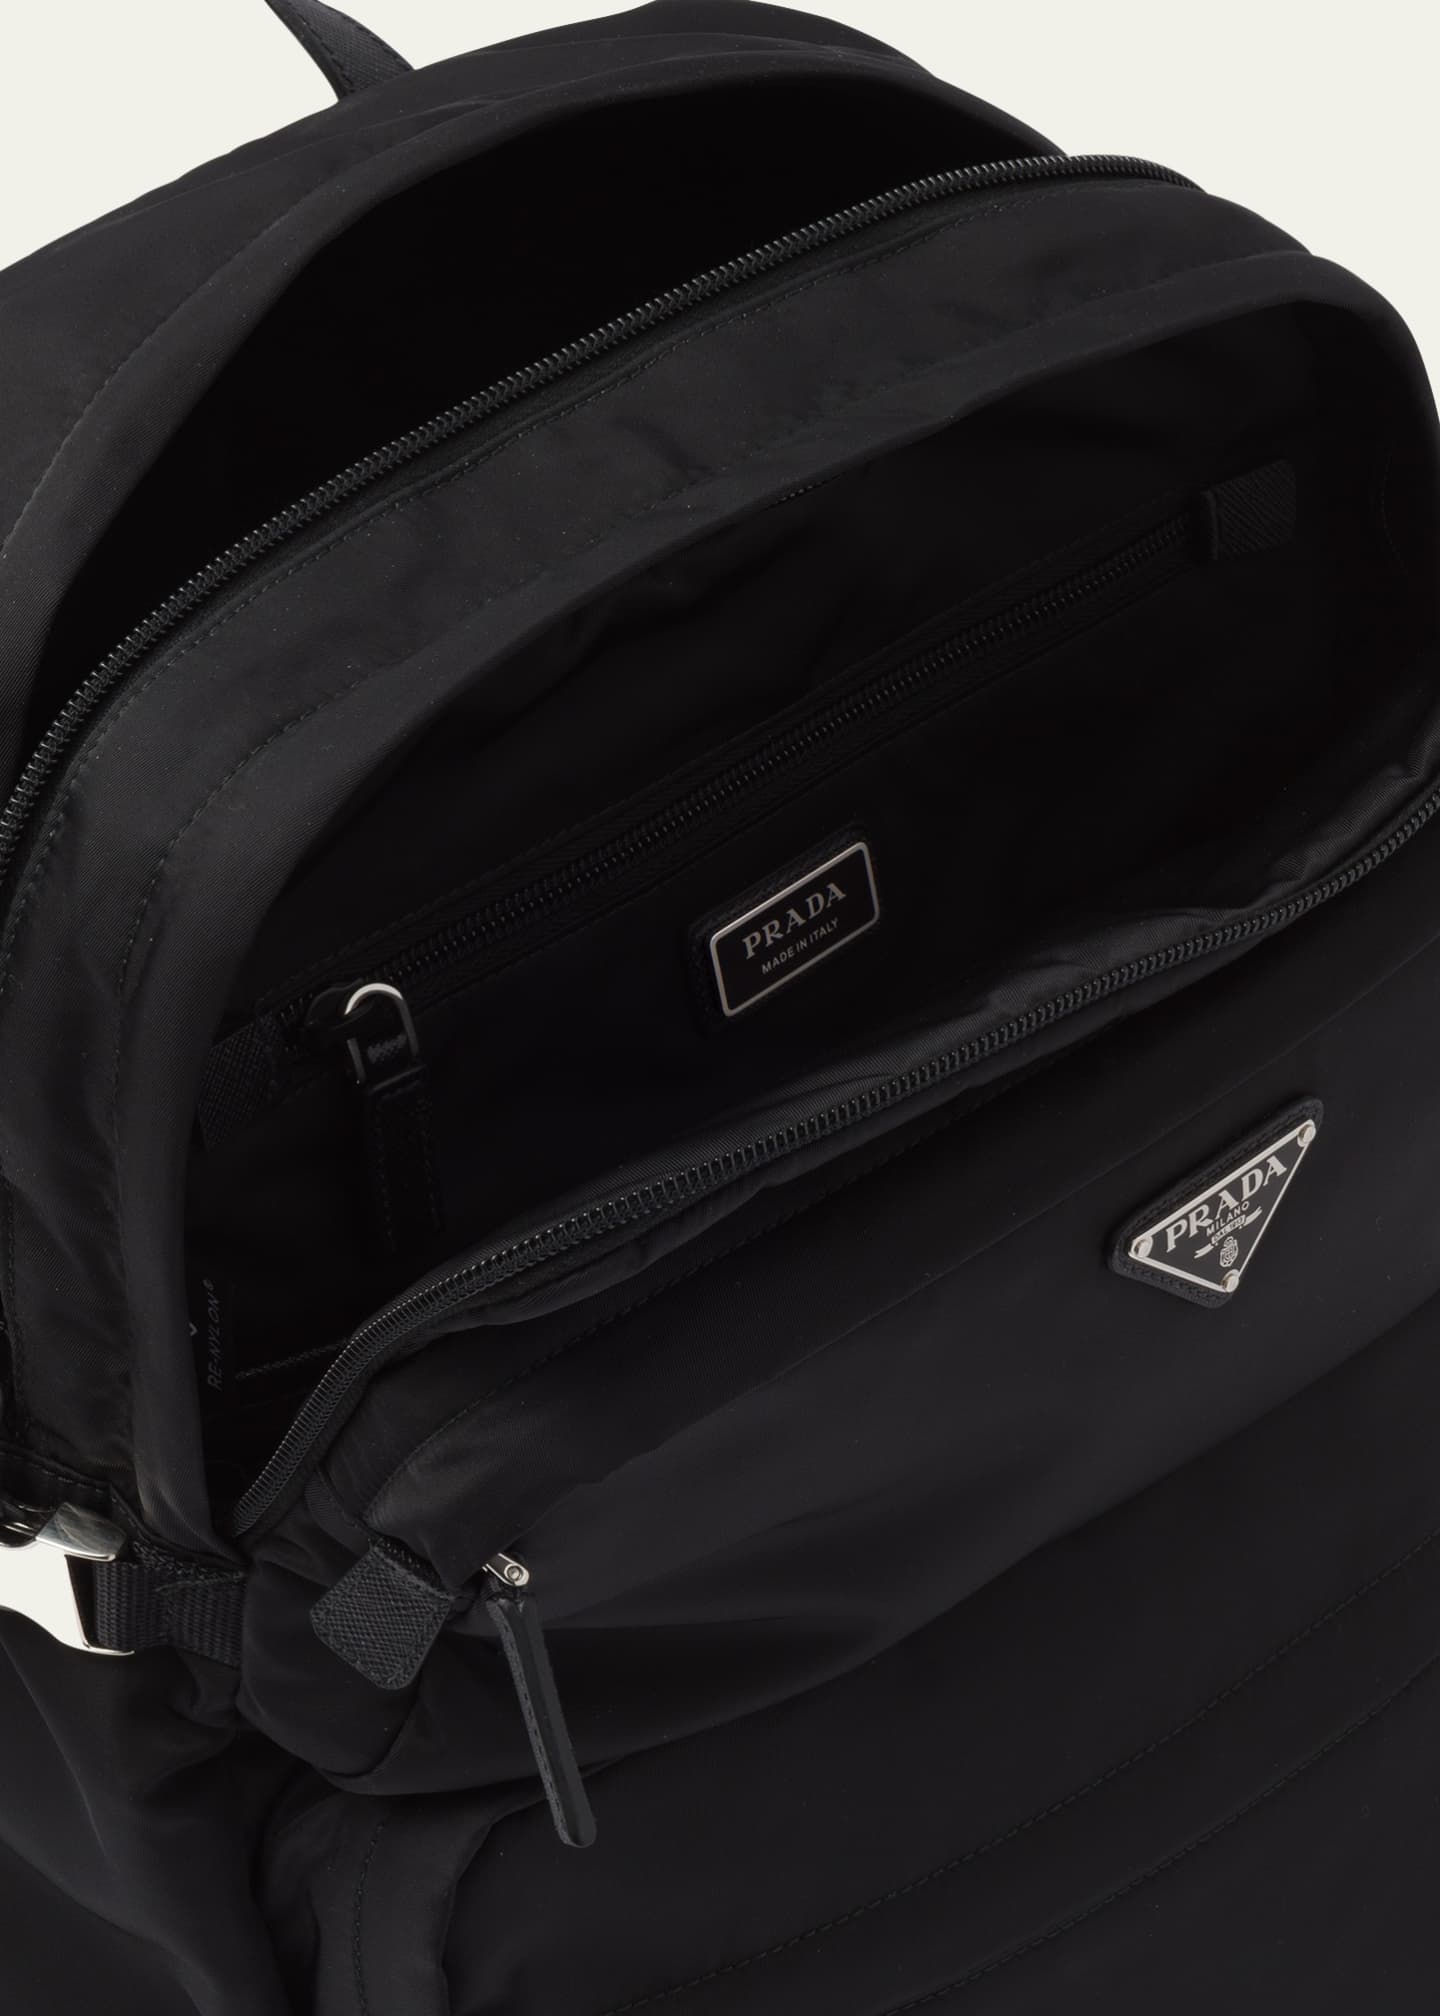 Prada Men's Saffiano Leather and Nylon Backpack